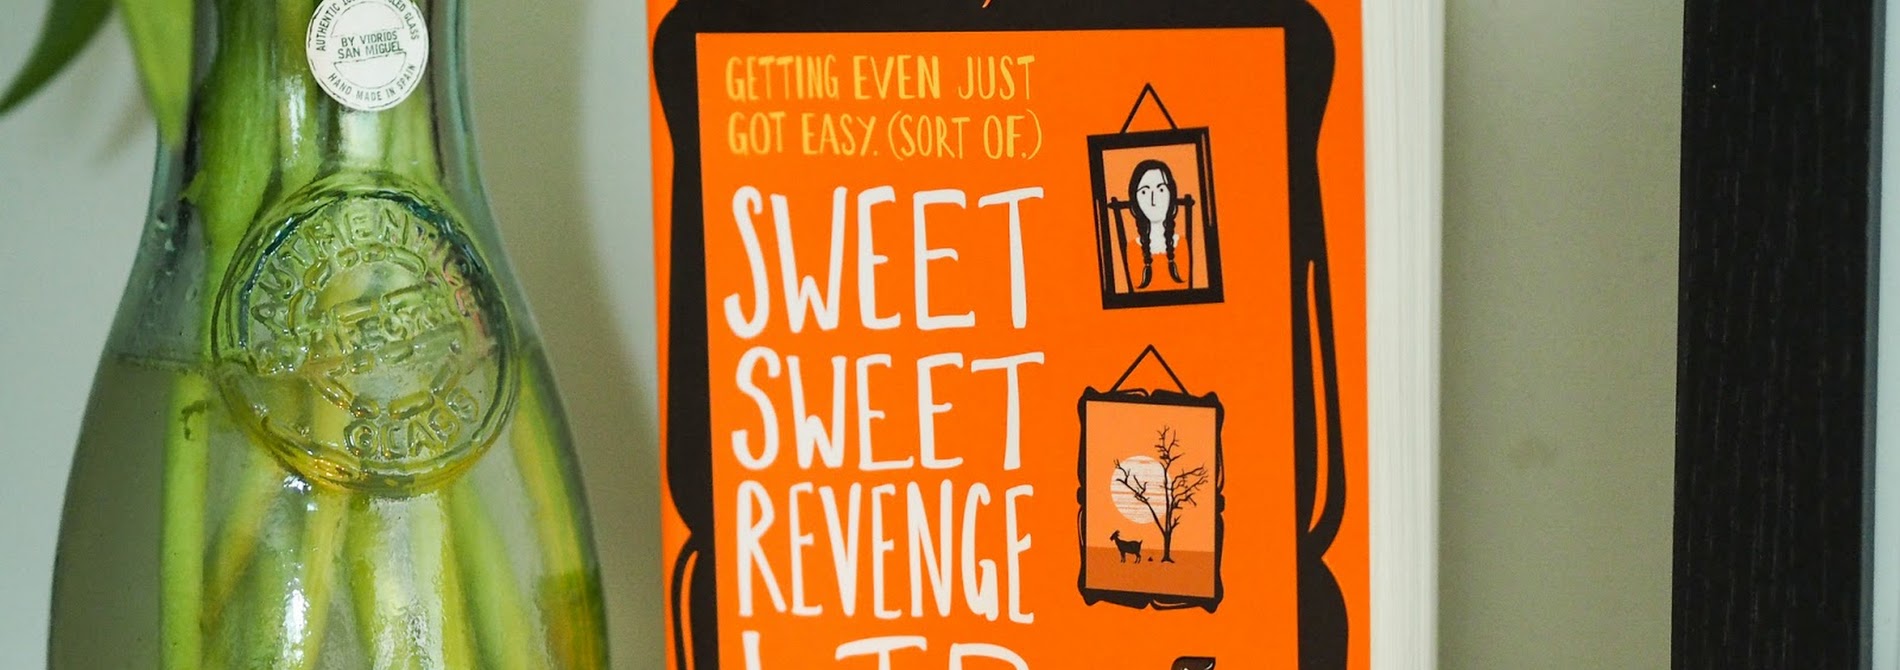 Books: Jonas Jonasson - Sweet Sweet Revenge LTD. — A Little Peculiar